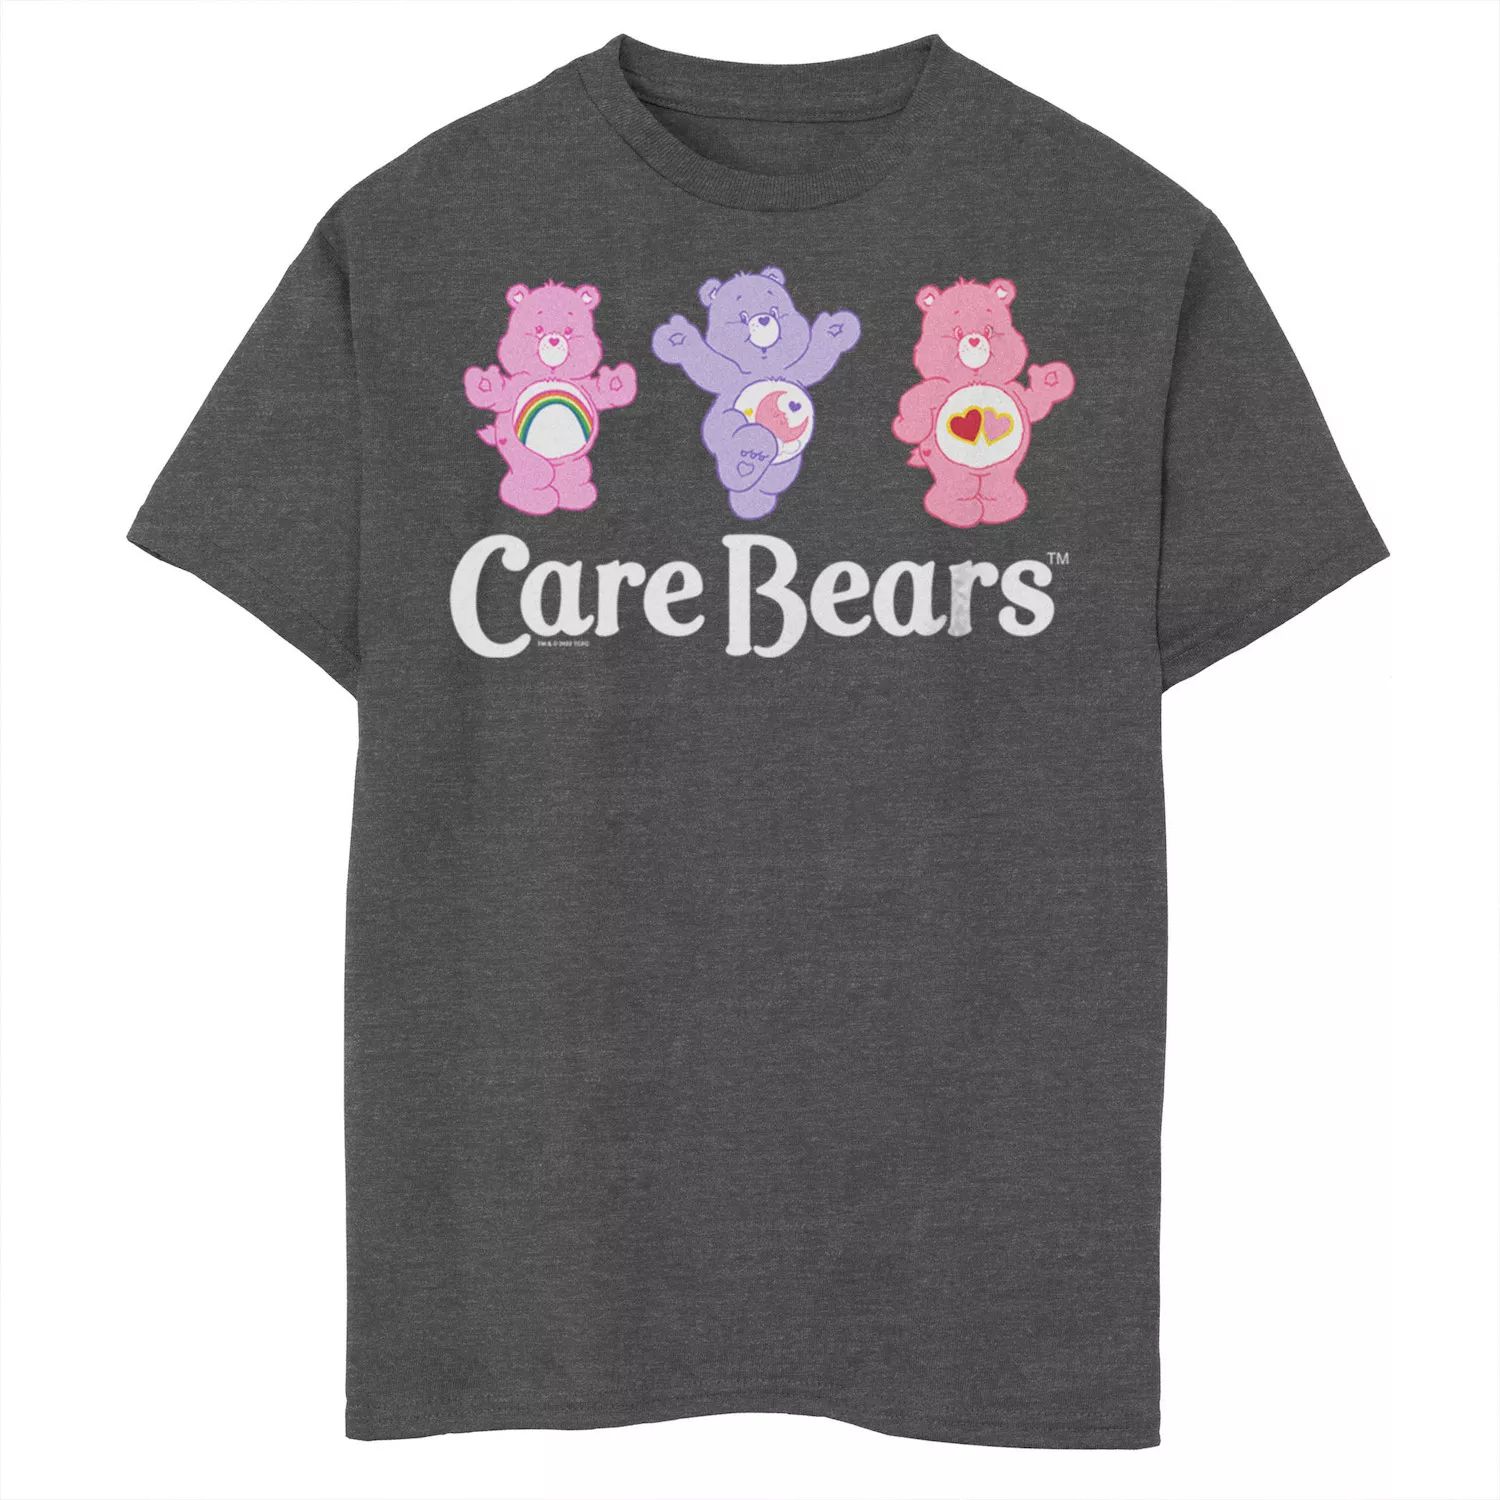 Футболка Care Bears Best Bears для мальчиков 8–20 лет с рисунком Licensed Character